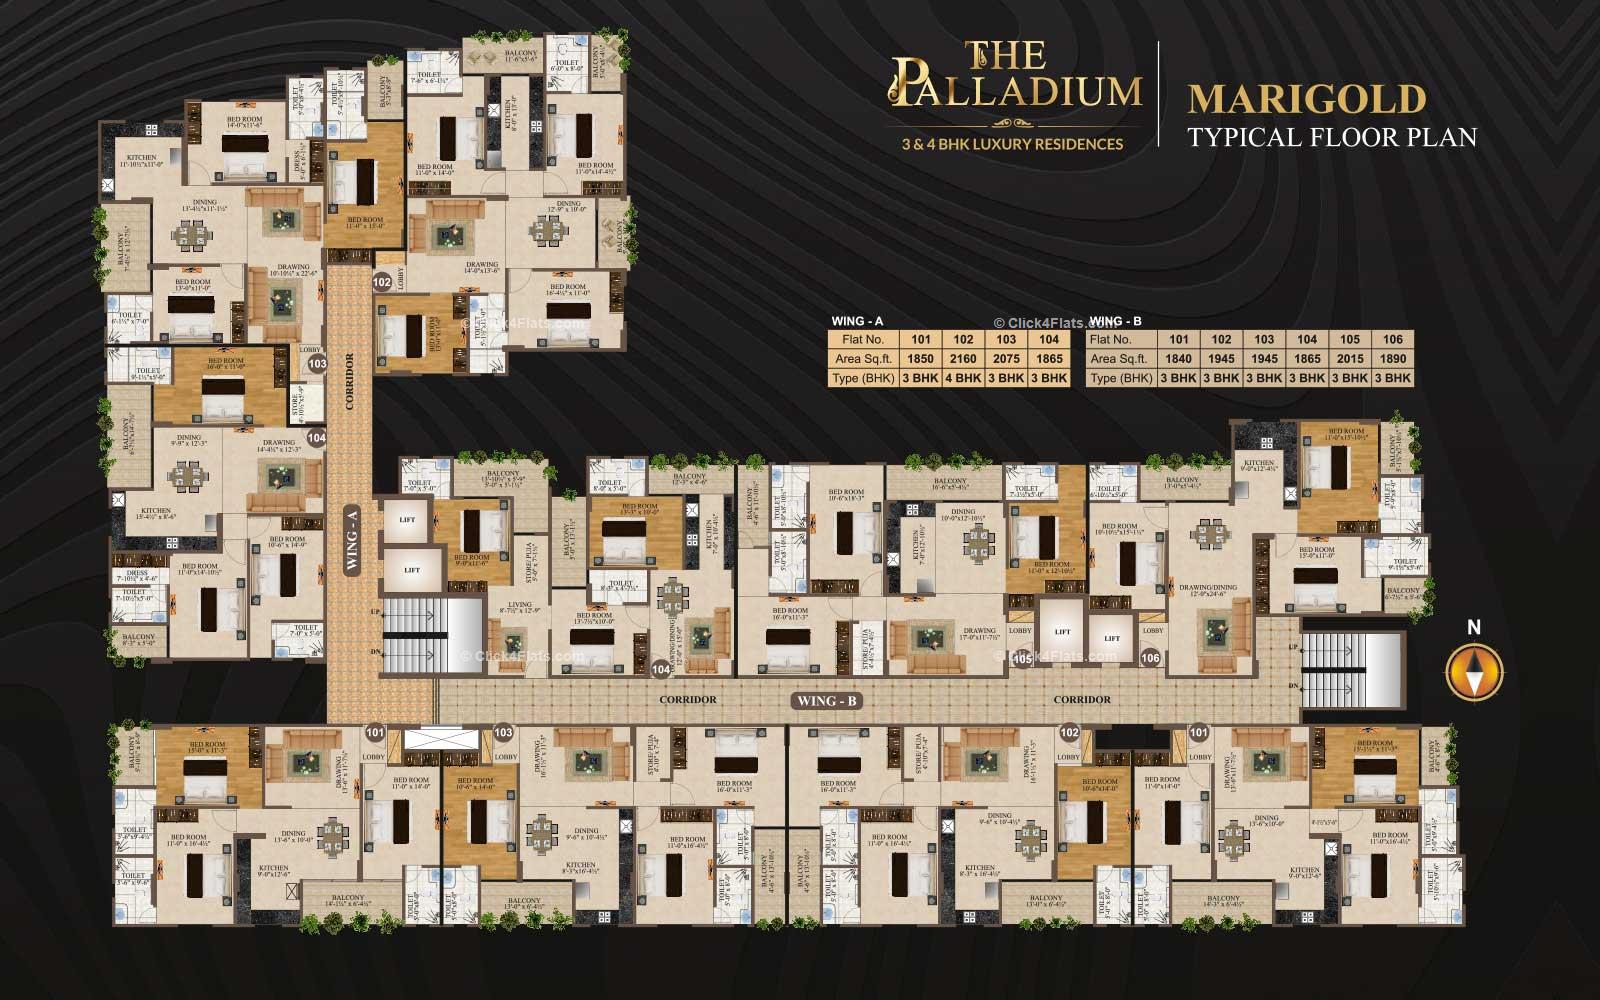 The Palladium Marigold Typical Floor Plan